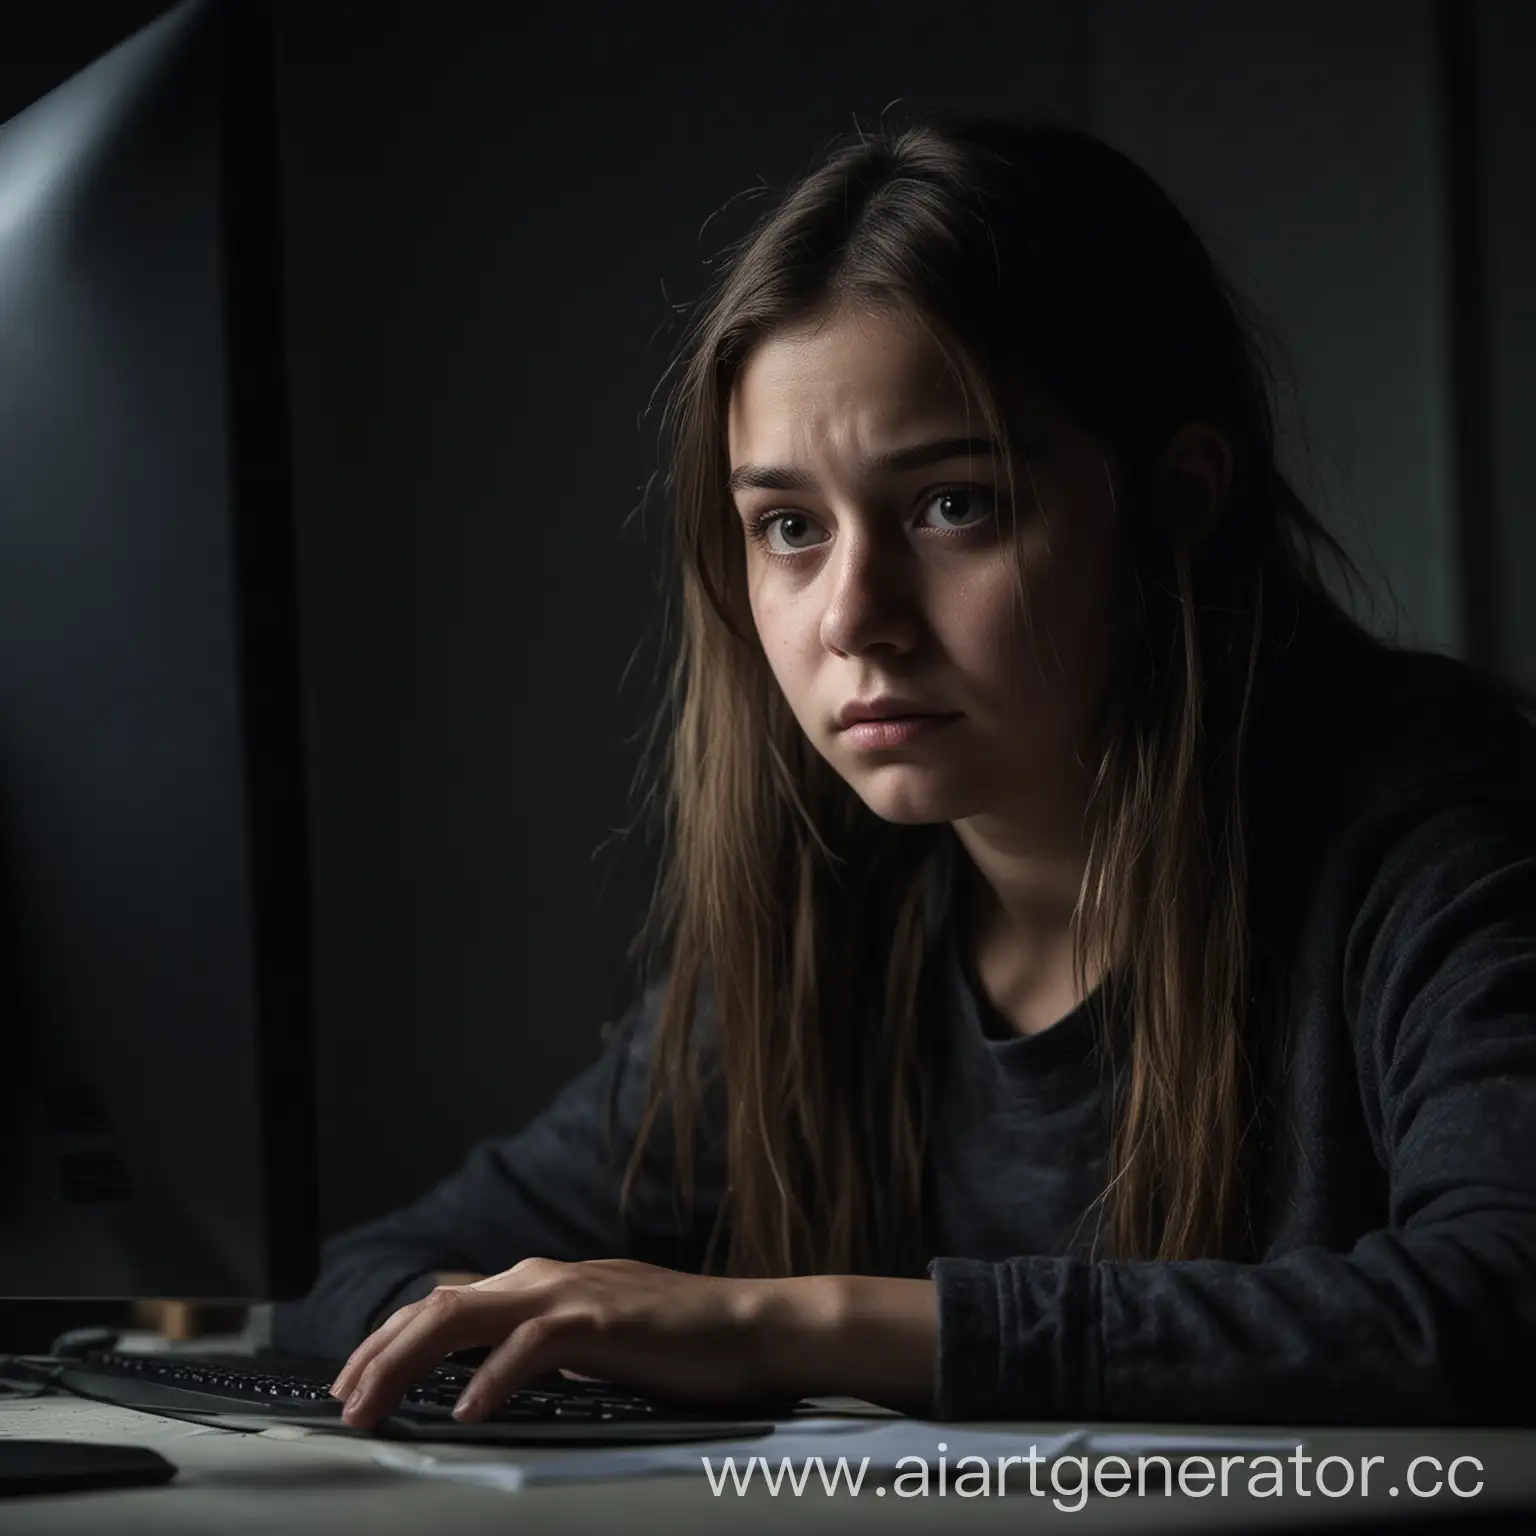 Sad-Girl-Using-Computer-in-Dimly-Lit-Room